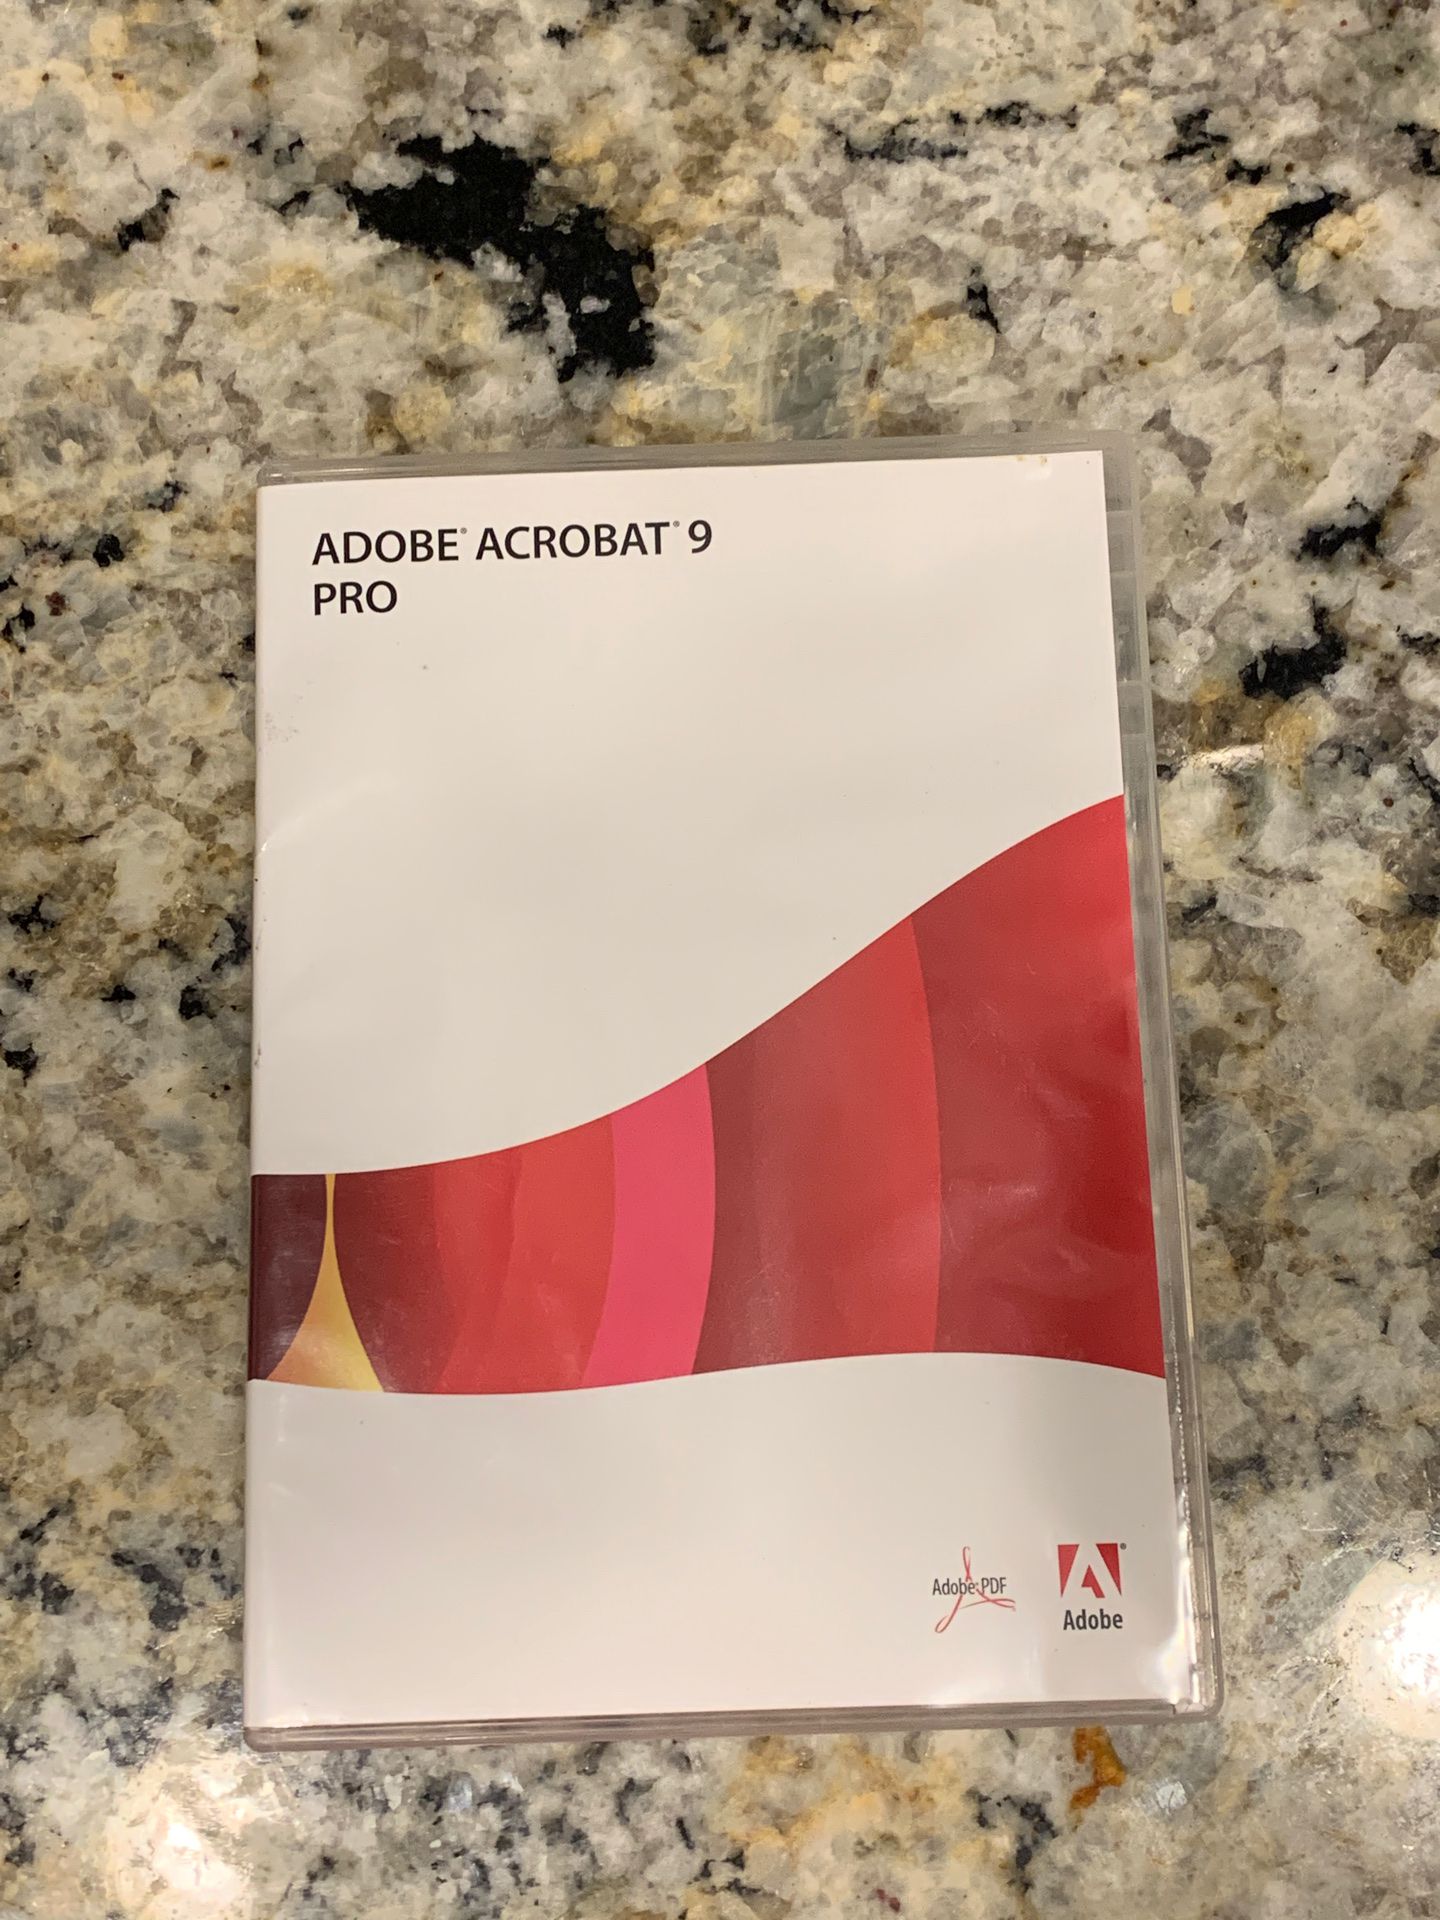 Adobe Acrobat 9 Professional Pro education